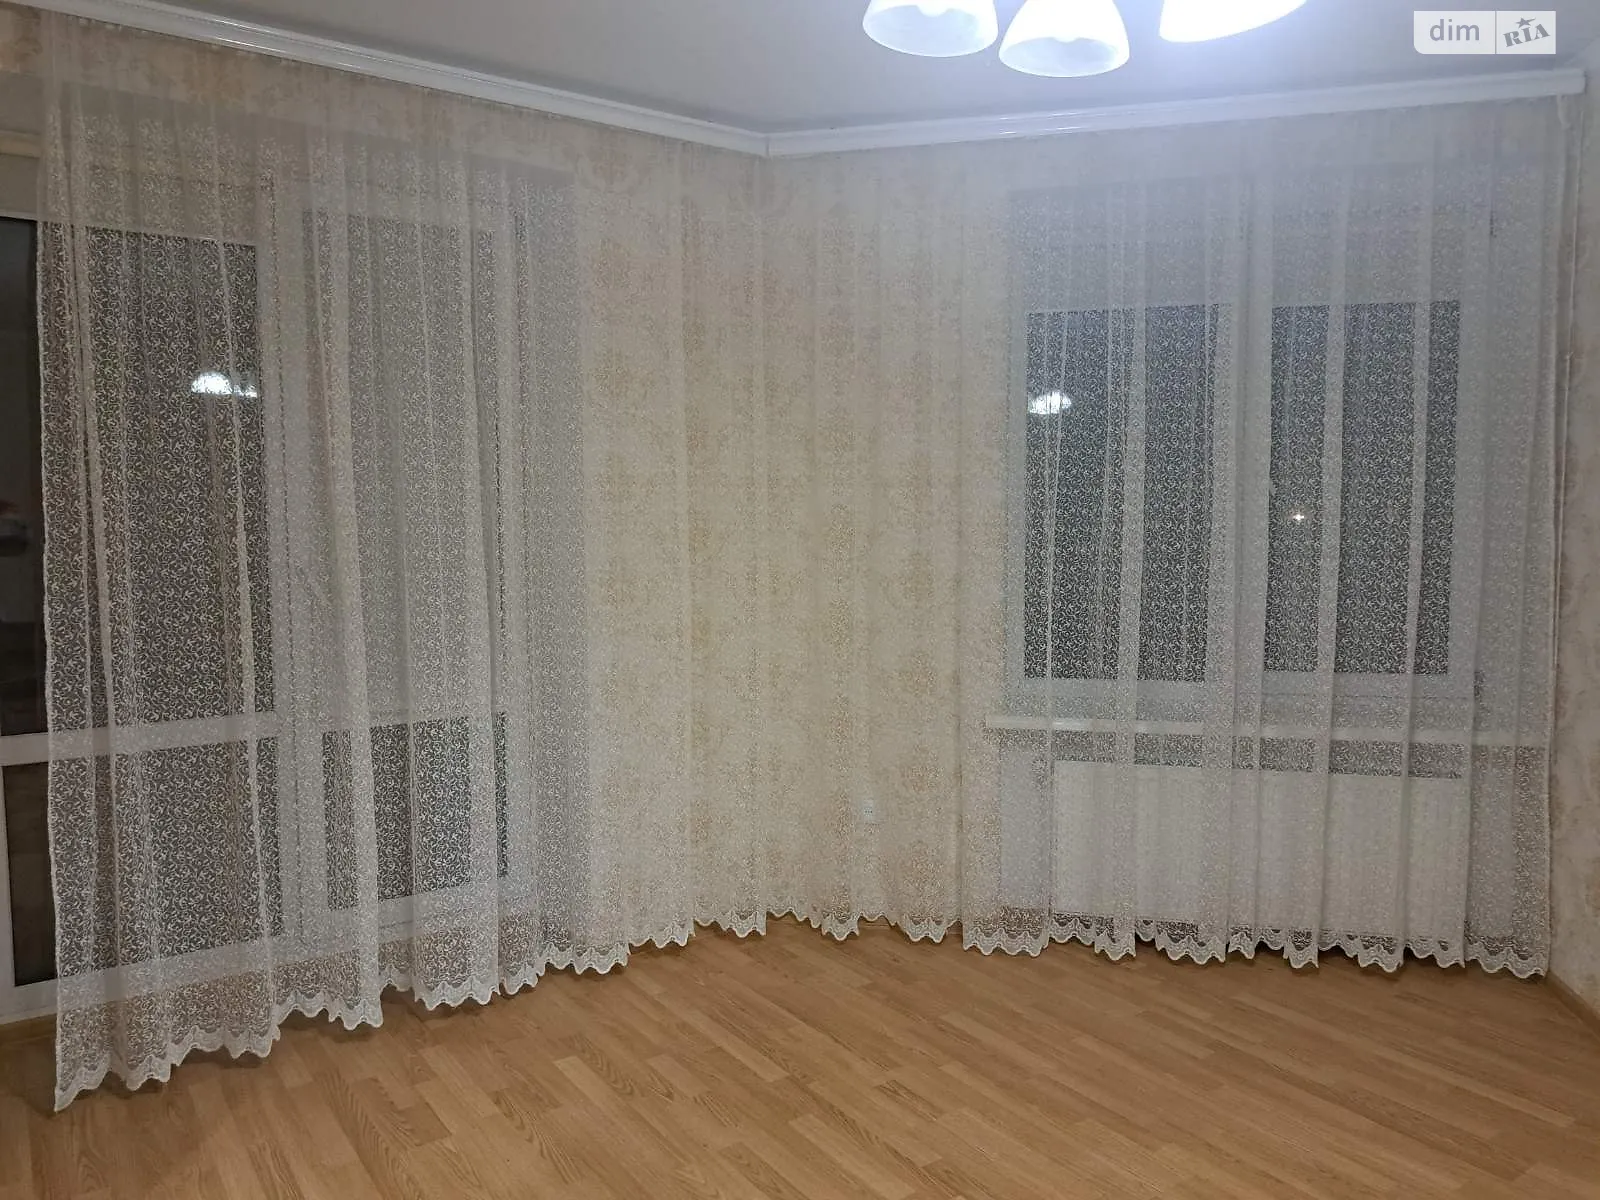 1-кімнатна квартира 48 кв. м у Луцьку, цена: 12500 грн